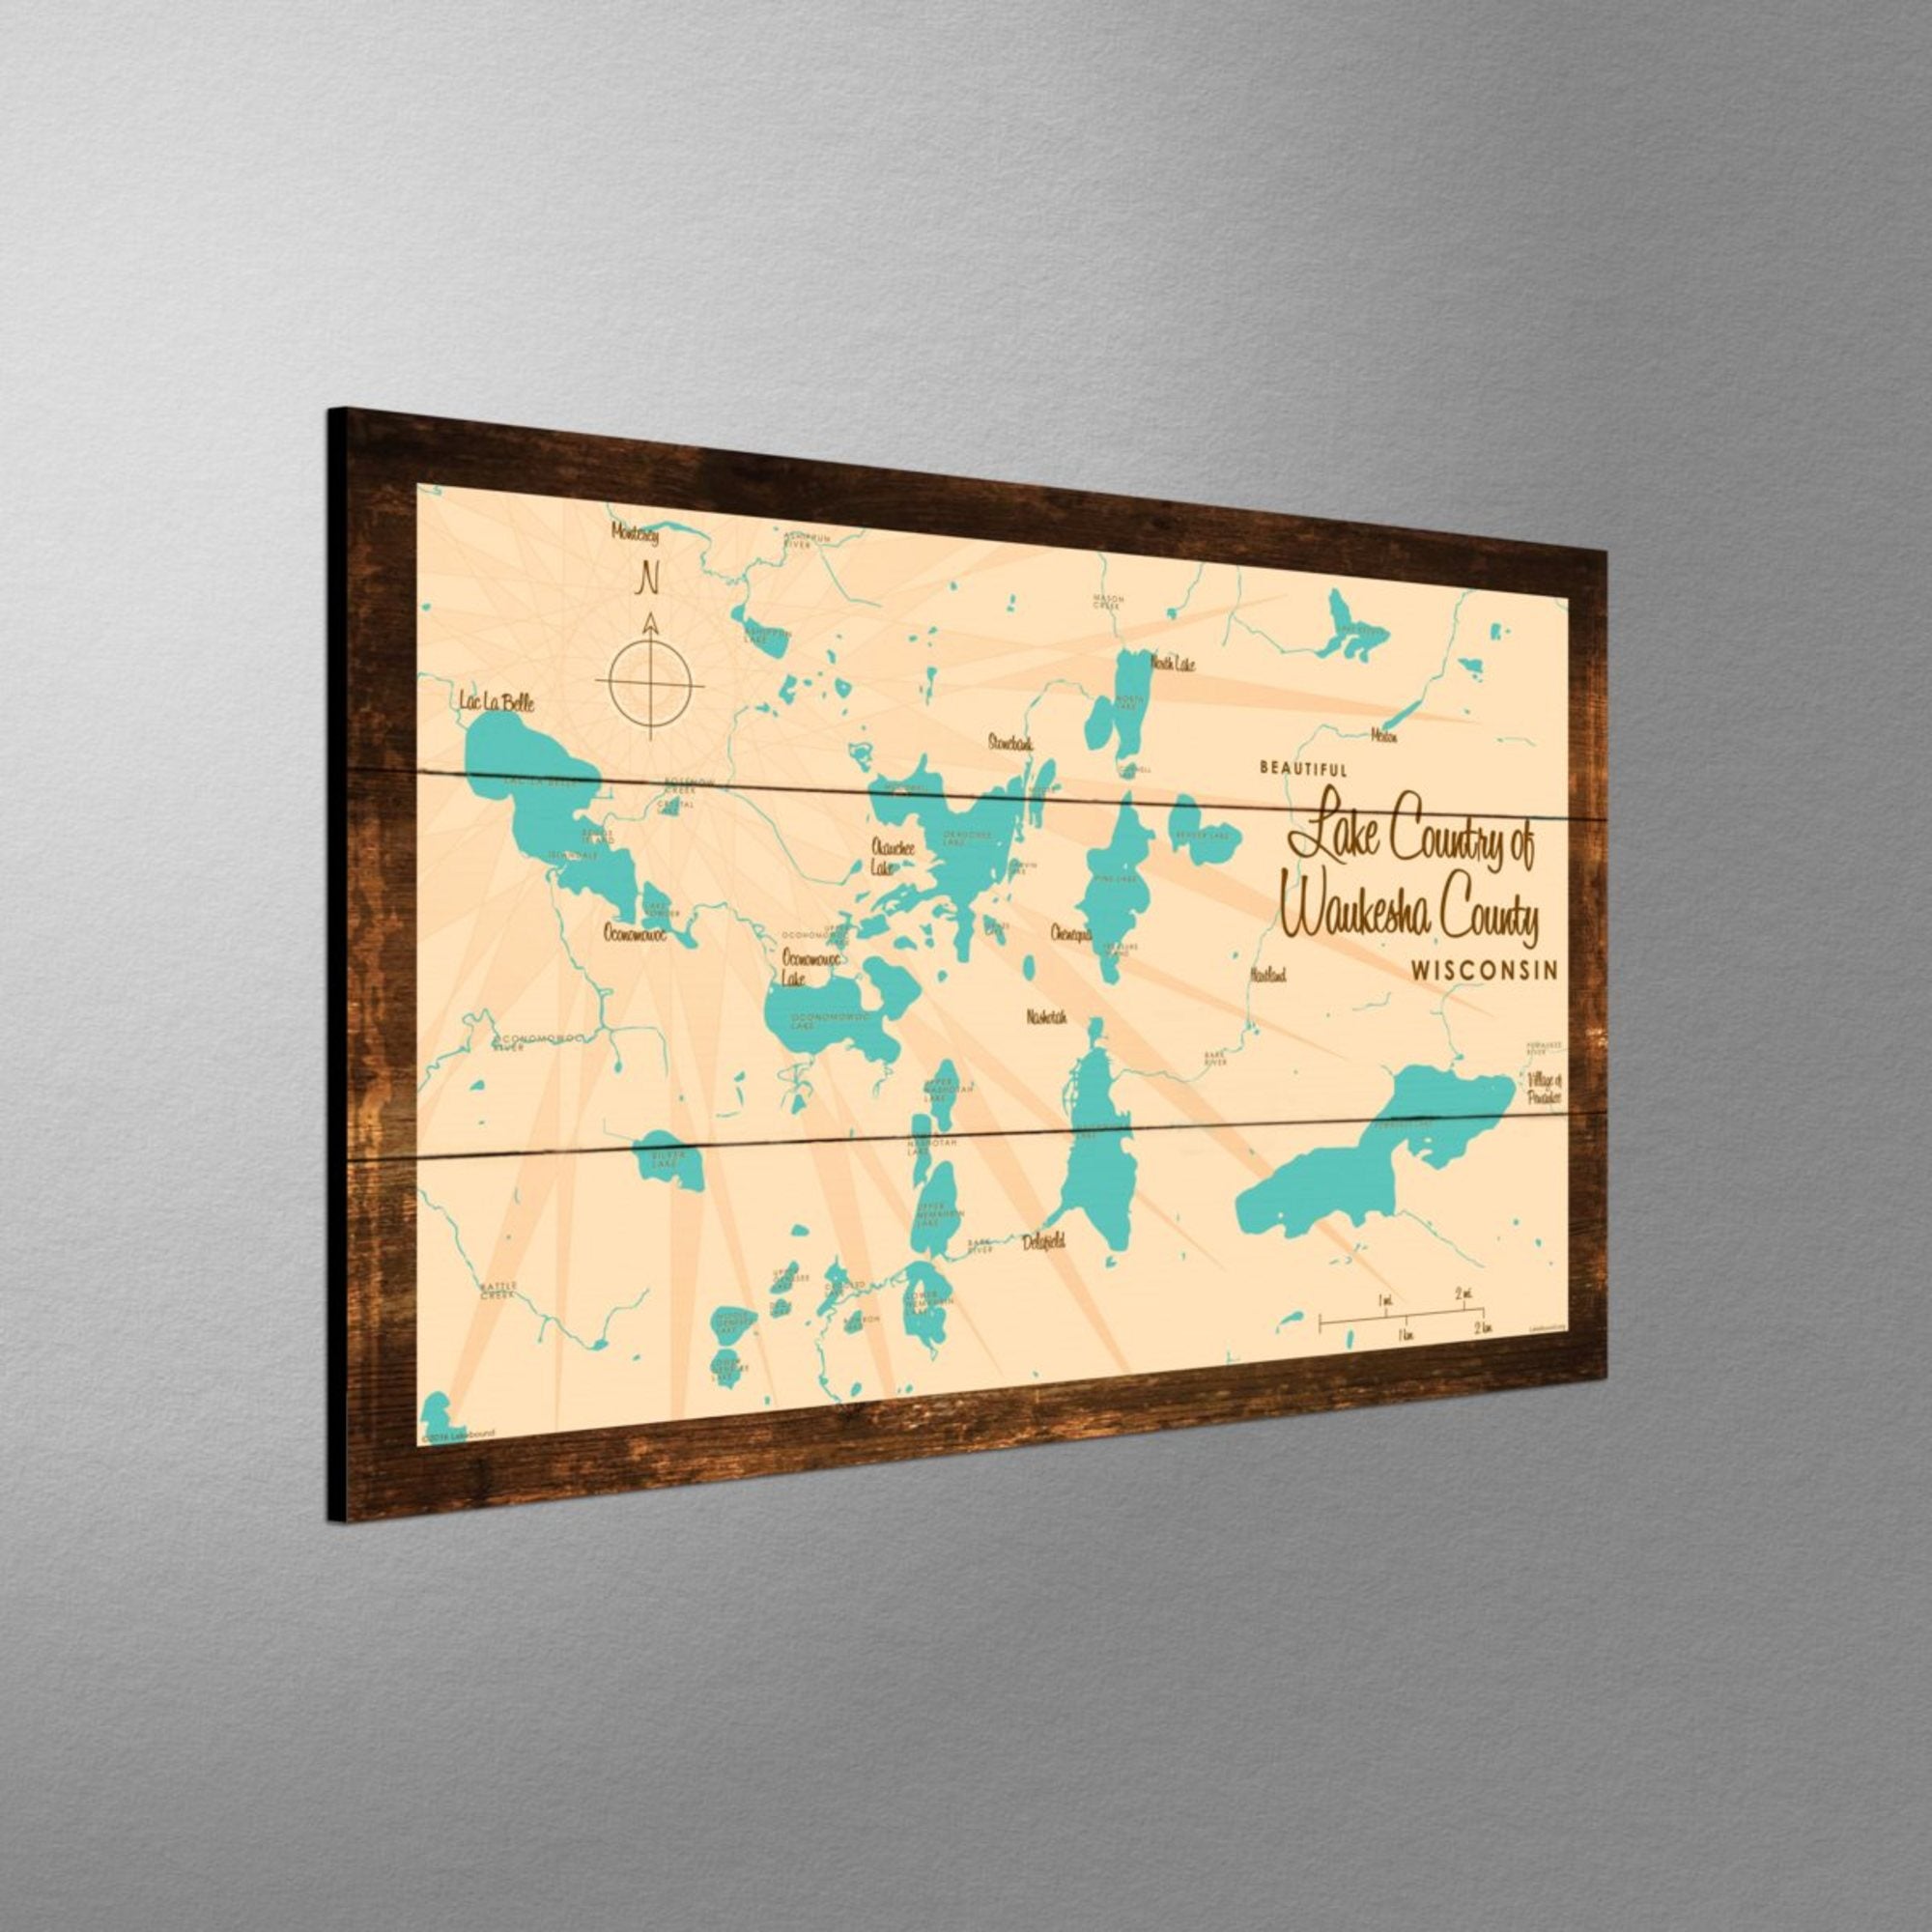 Lake Country Waukesha County Wisconsin, Rustic Wood Sign Map Art